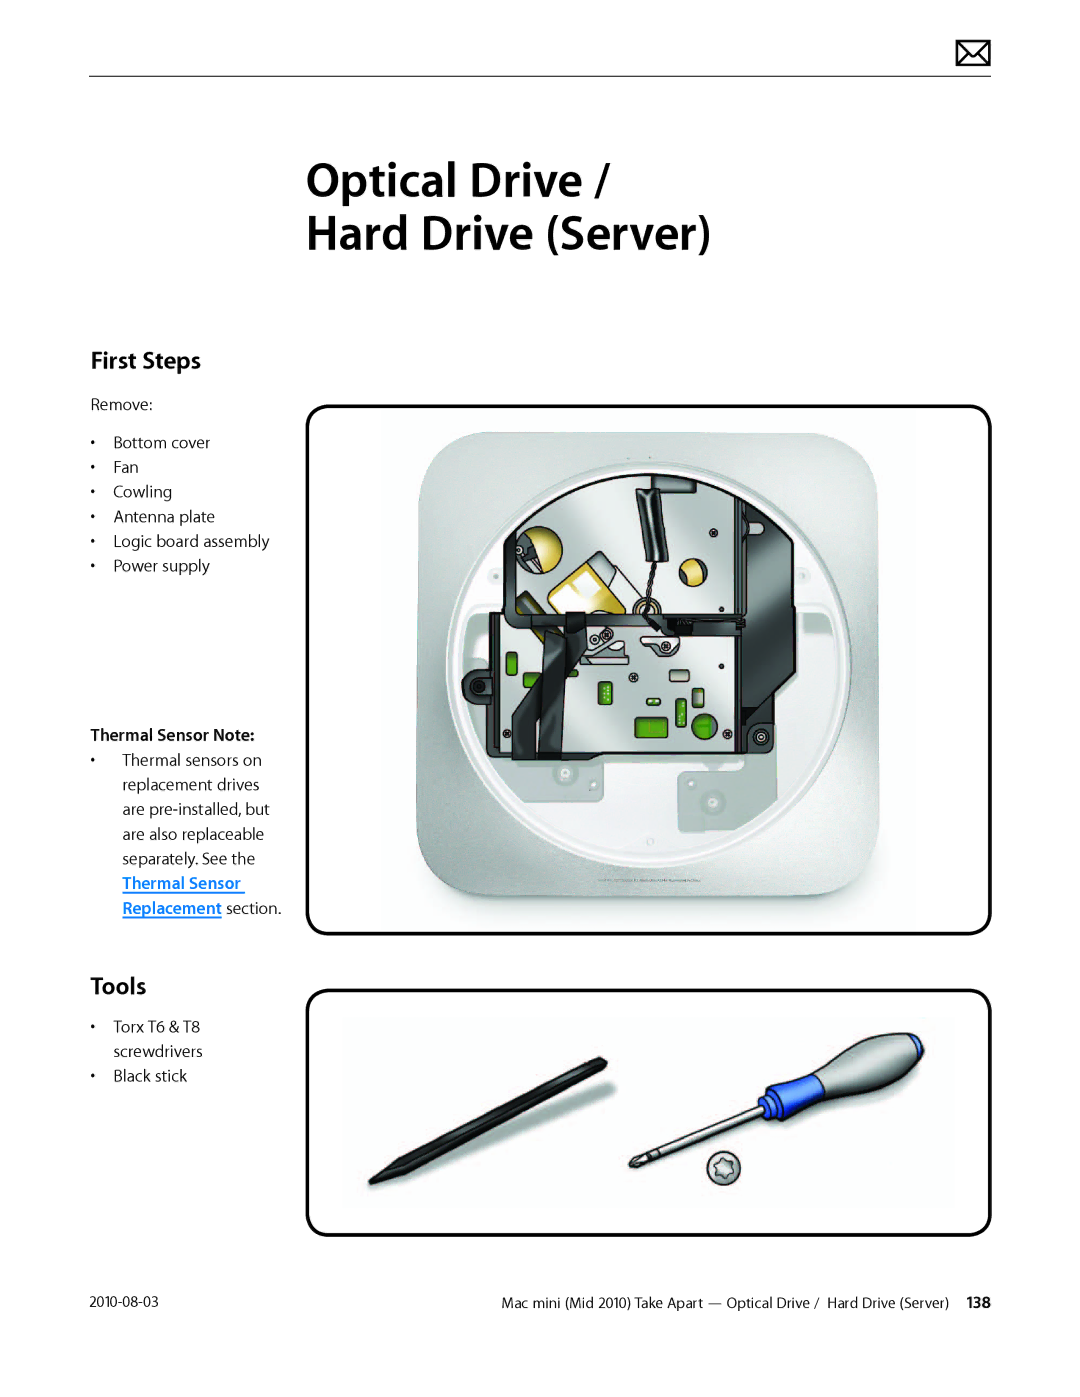 Apple Mac mini manual Optical Drive Hard Drive Server, First Steps 